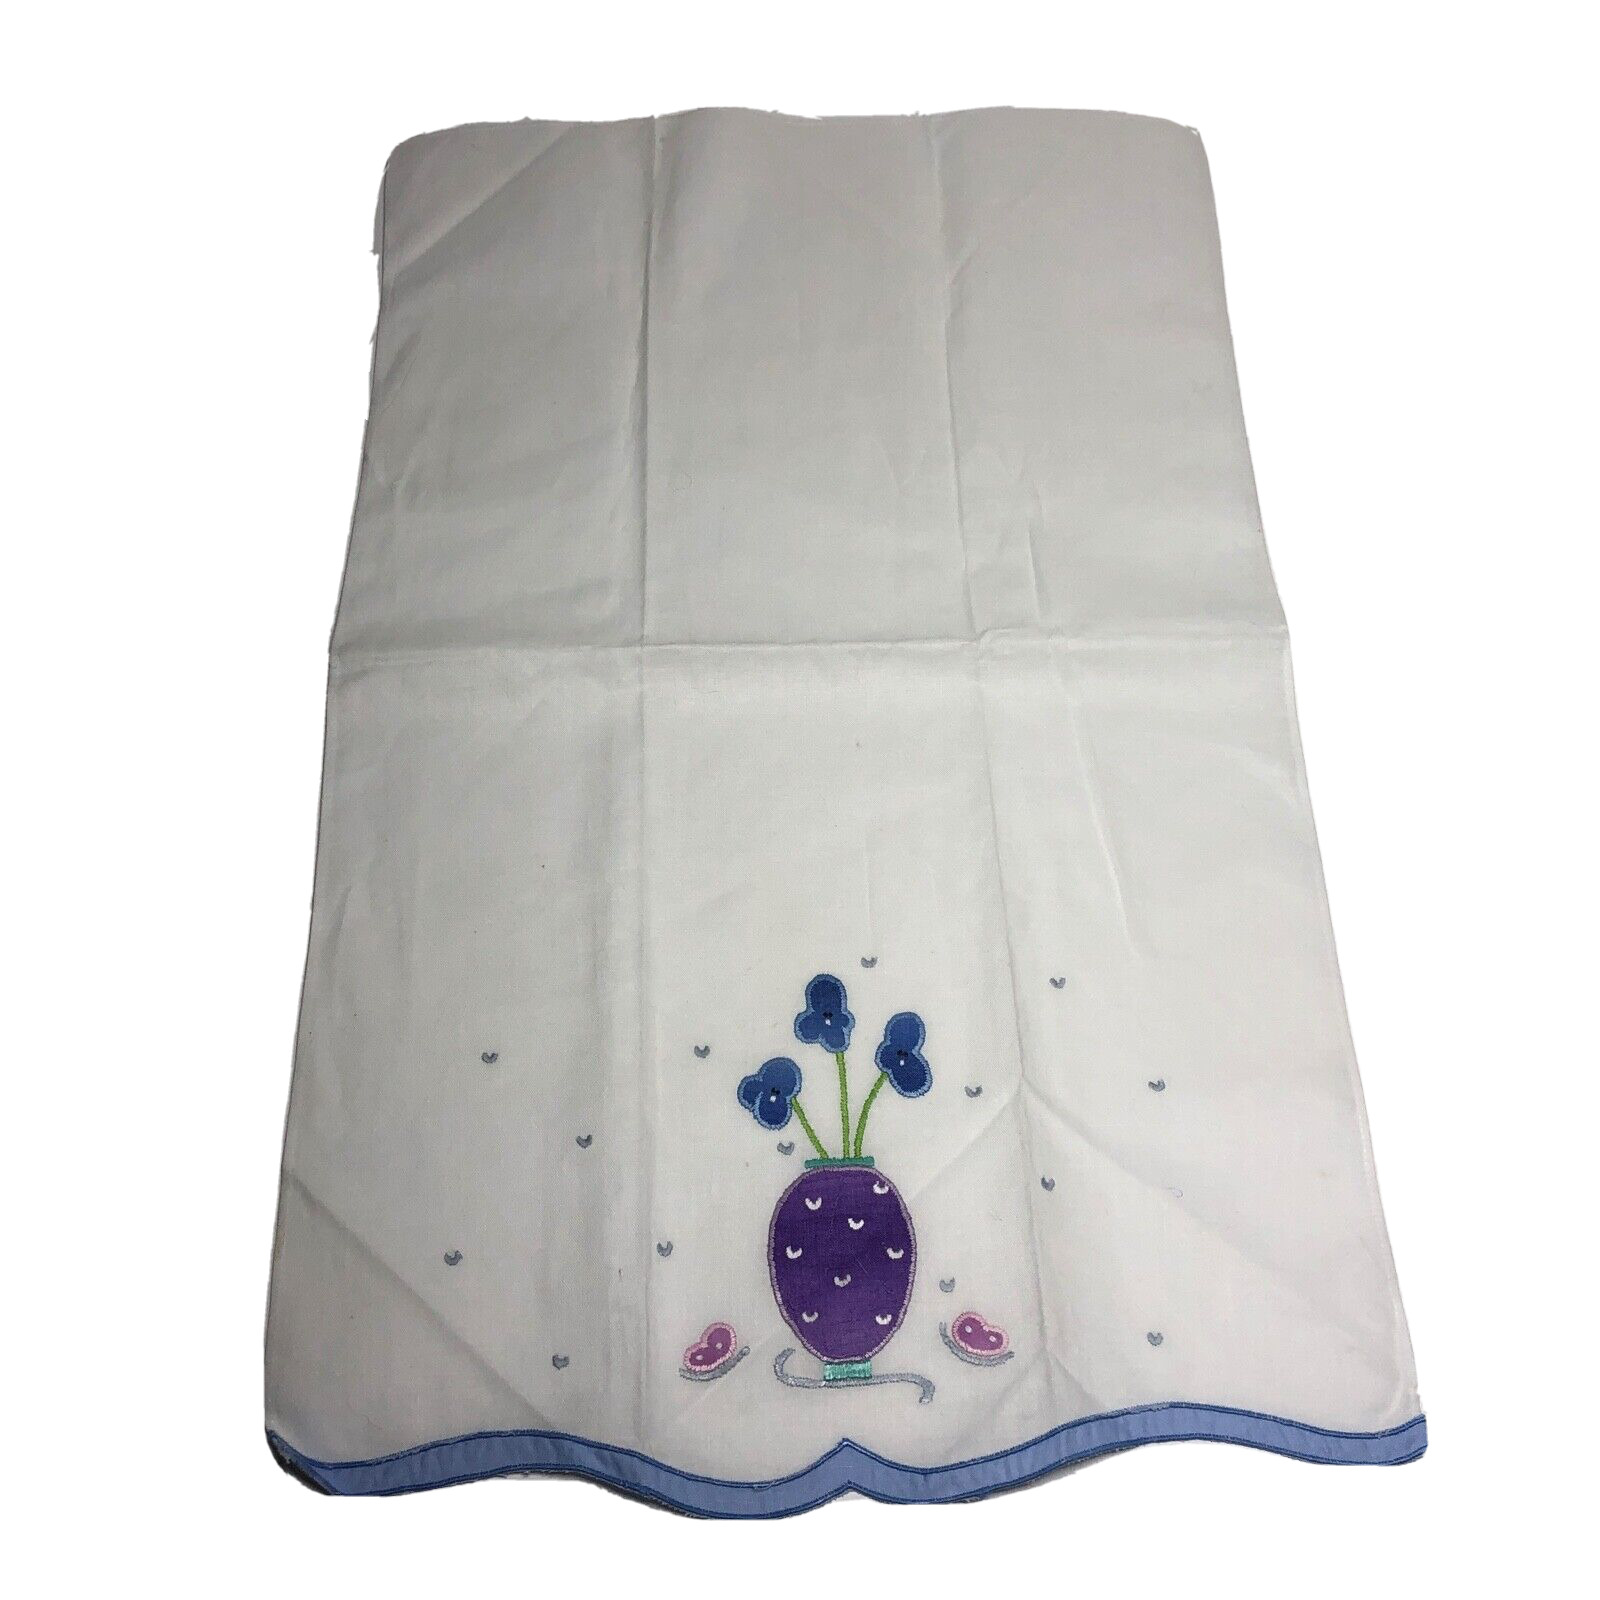 VTG White Appliquéd Embroidered Linen Hand Towel, Flower, Butterfly, Cottagecore